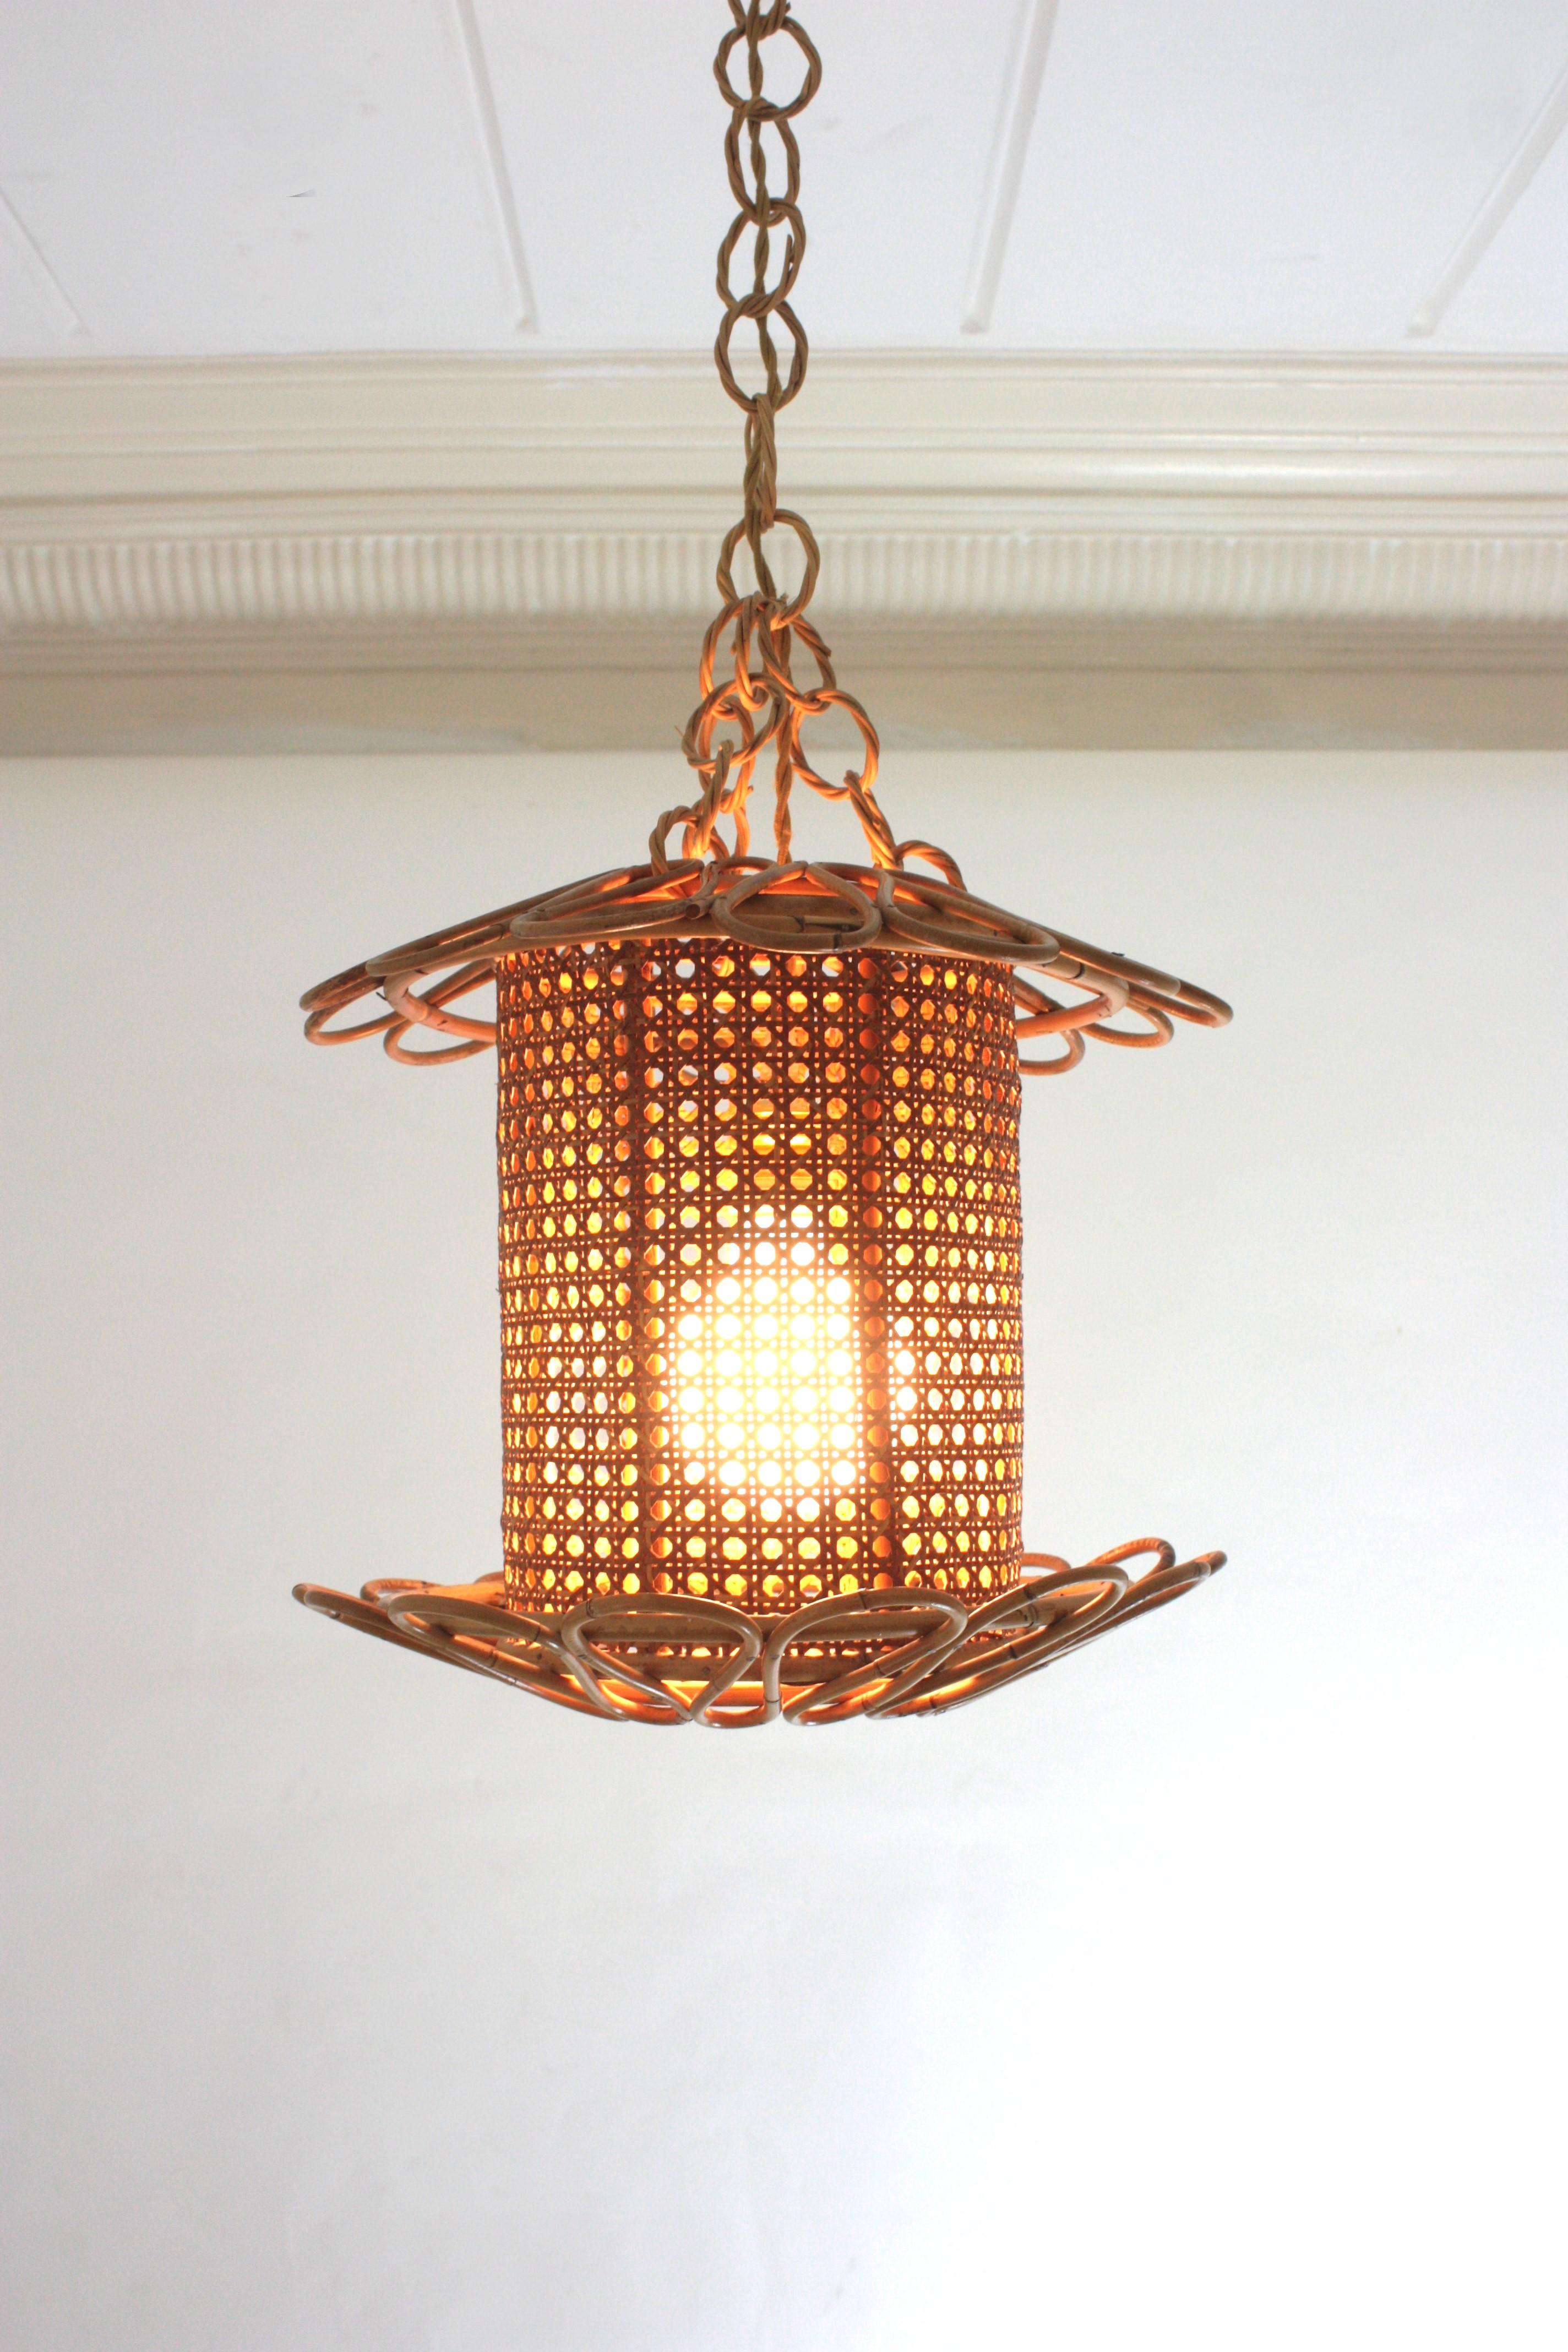 20th Century Italian Modernist Rattan & Wicker Wire Pendant Hanging Light, 1950s For Sale